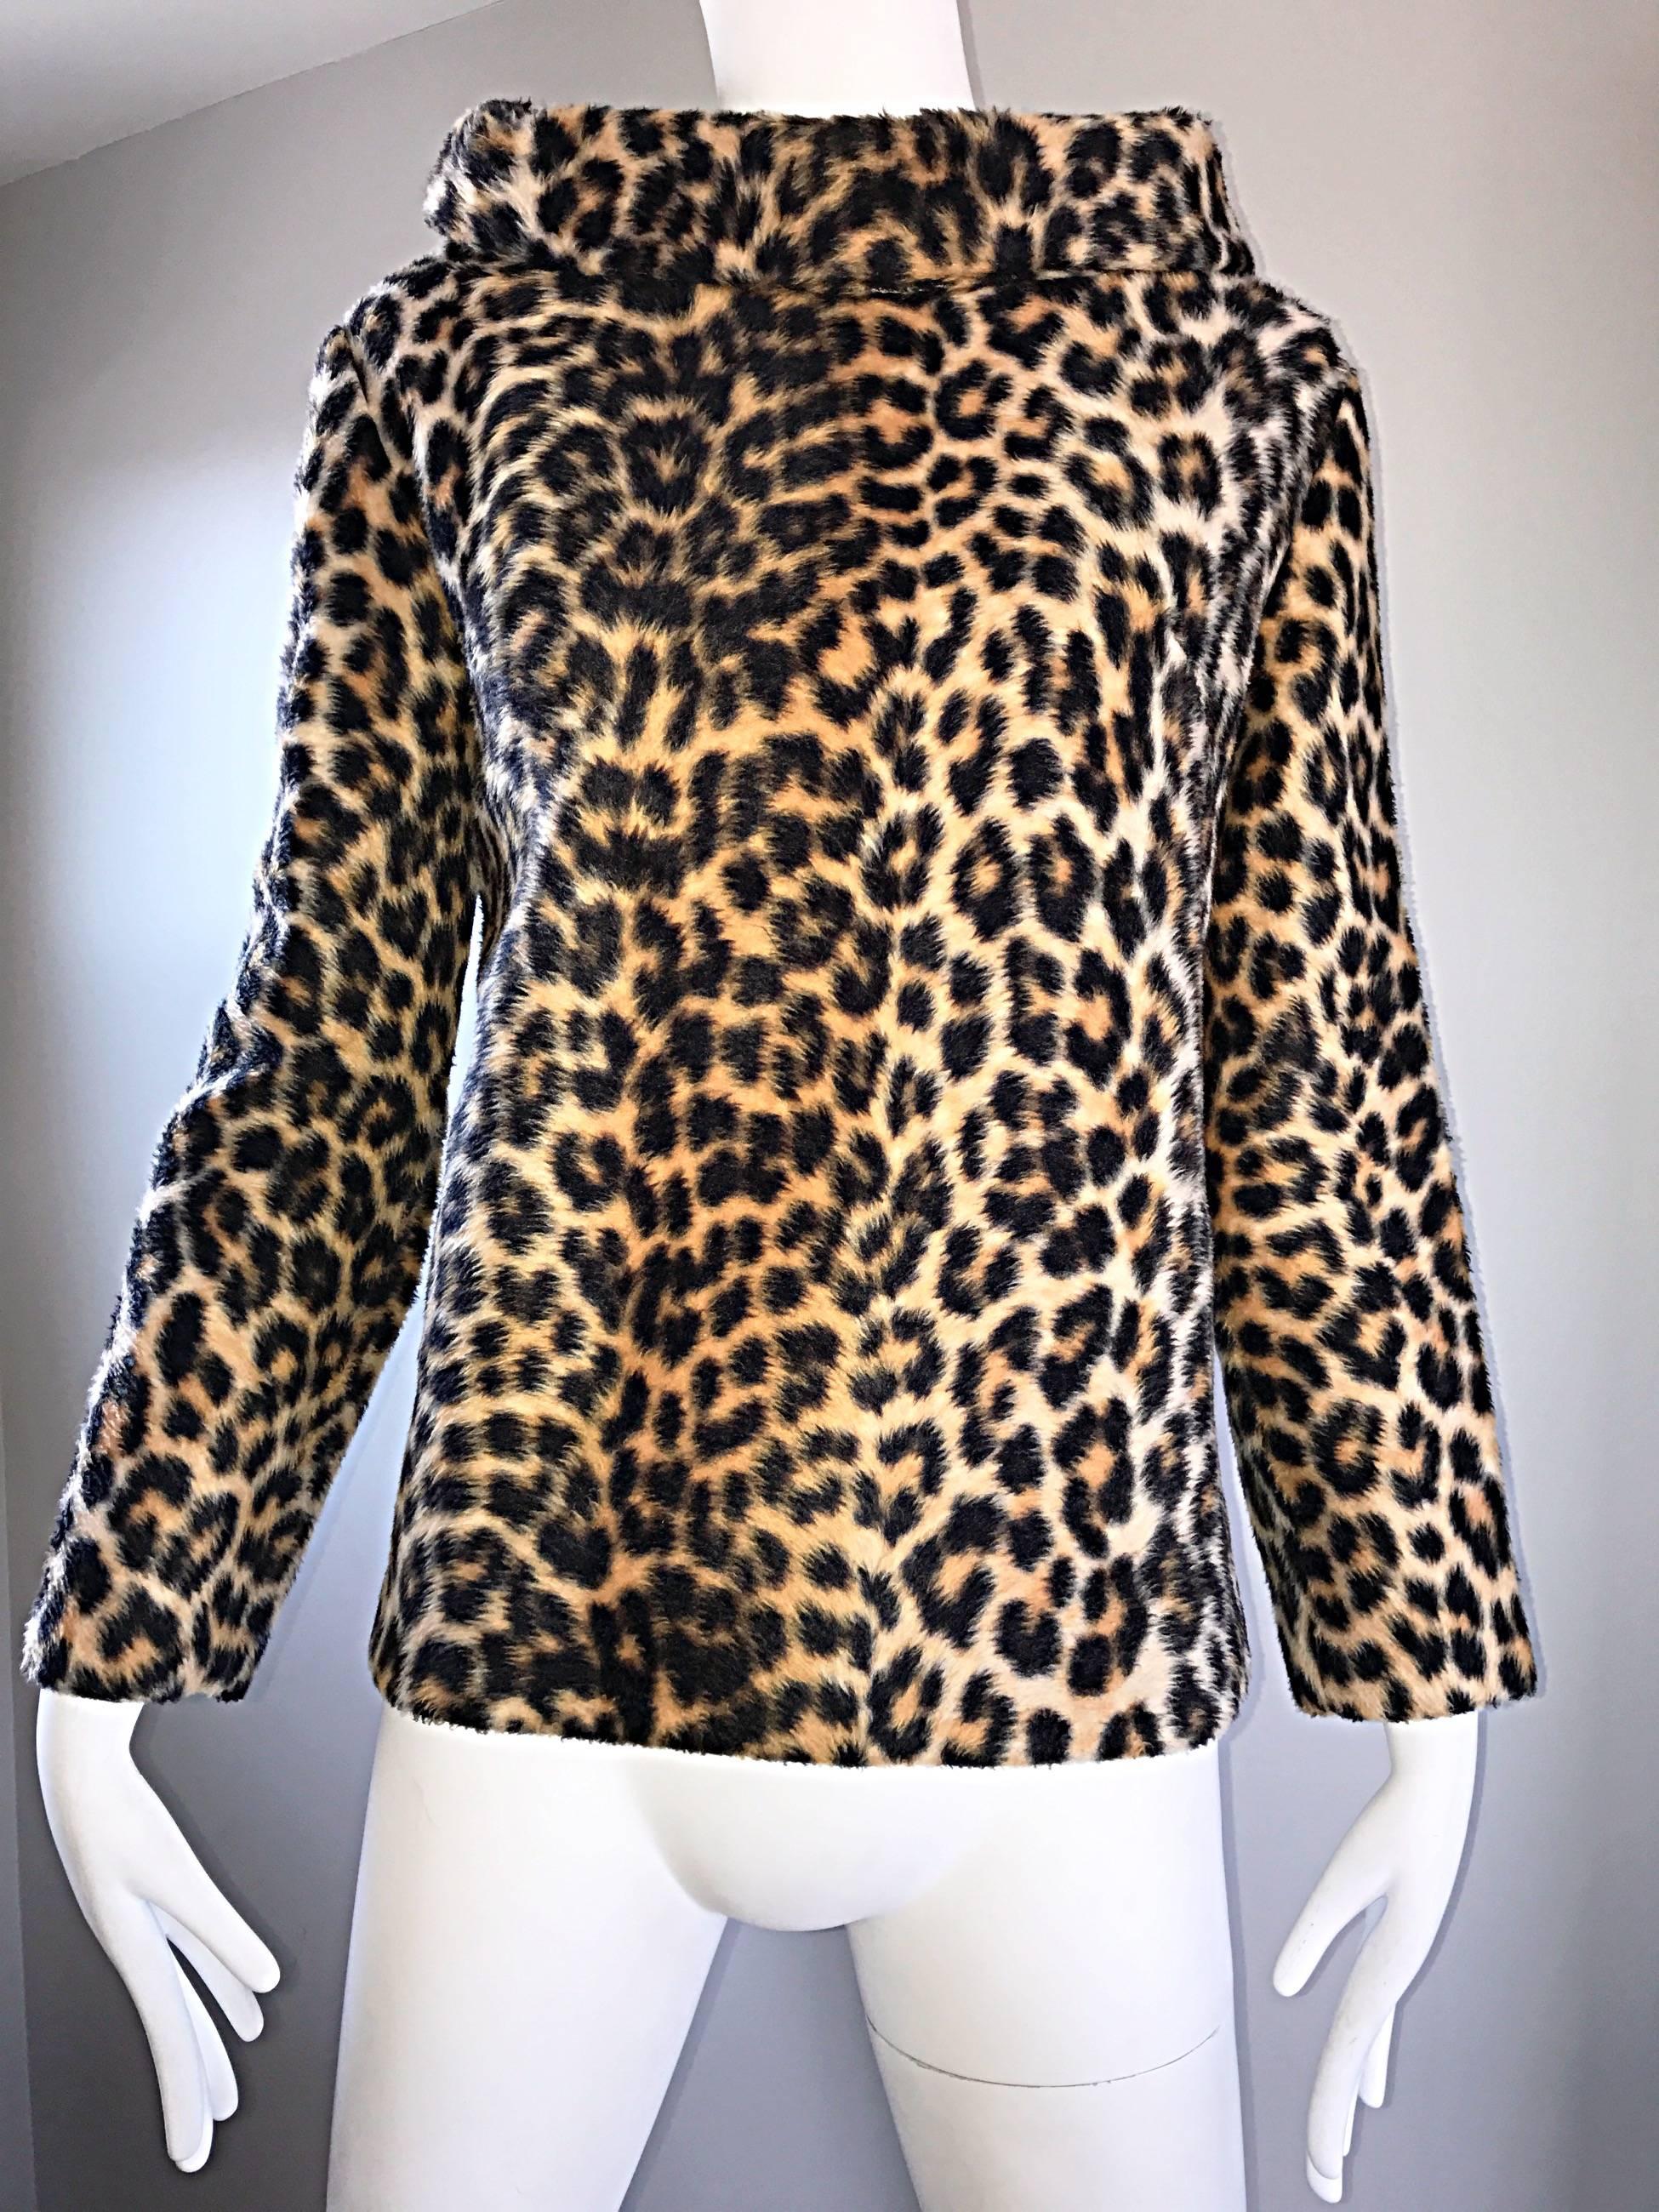 Chic 1960s Faux Fur Leopard Cheetah Print Vintage 60s Long Sleeve Sweater Top   1